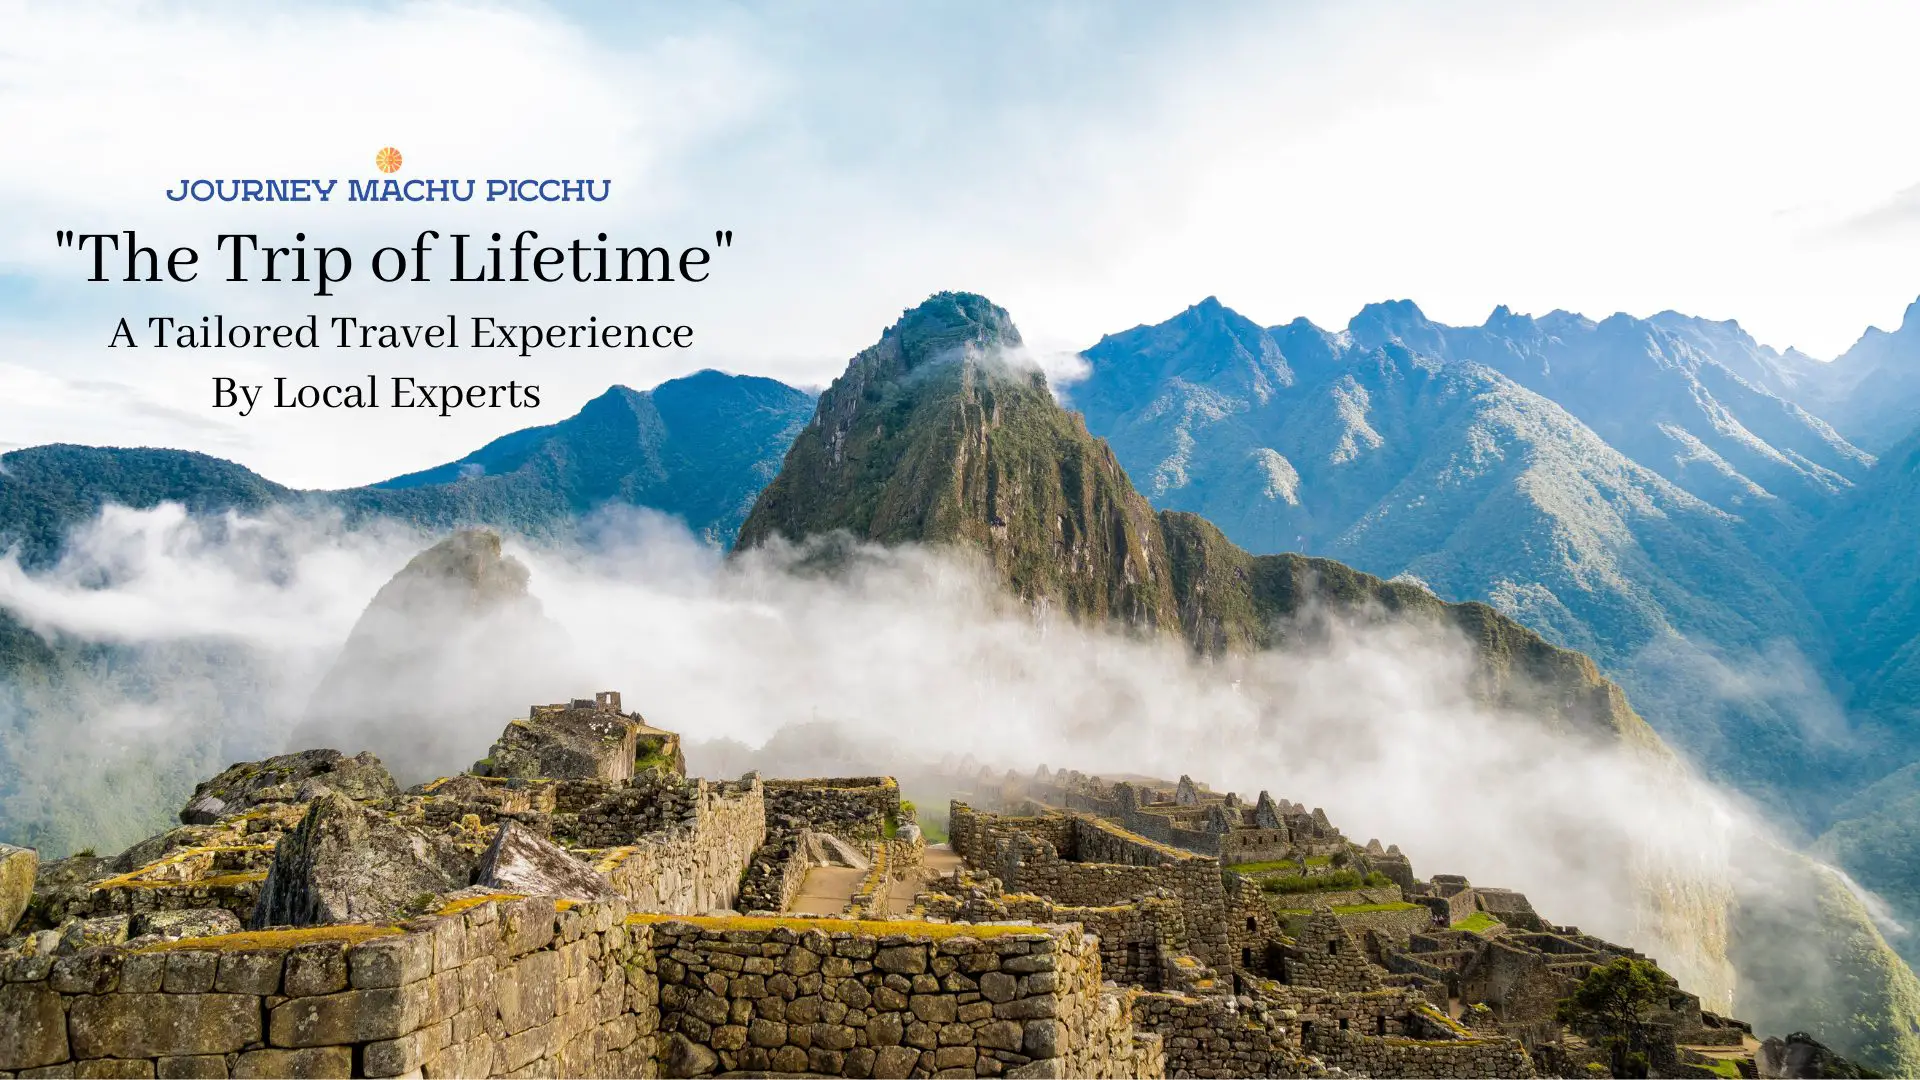 Journey Machu Picchu Travel Agency